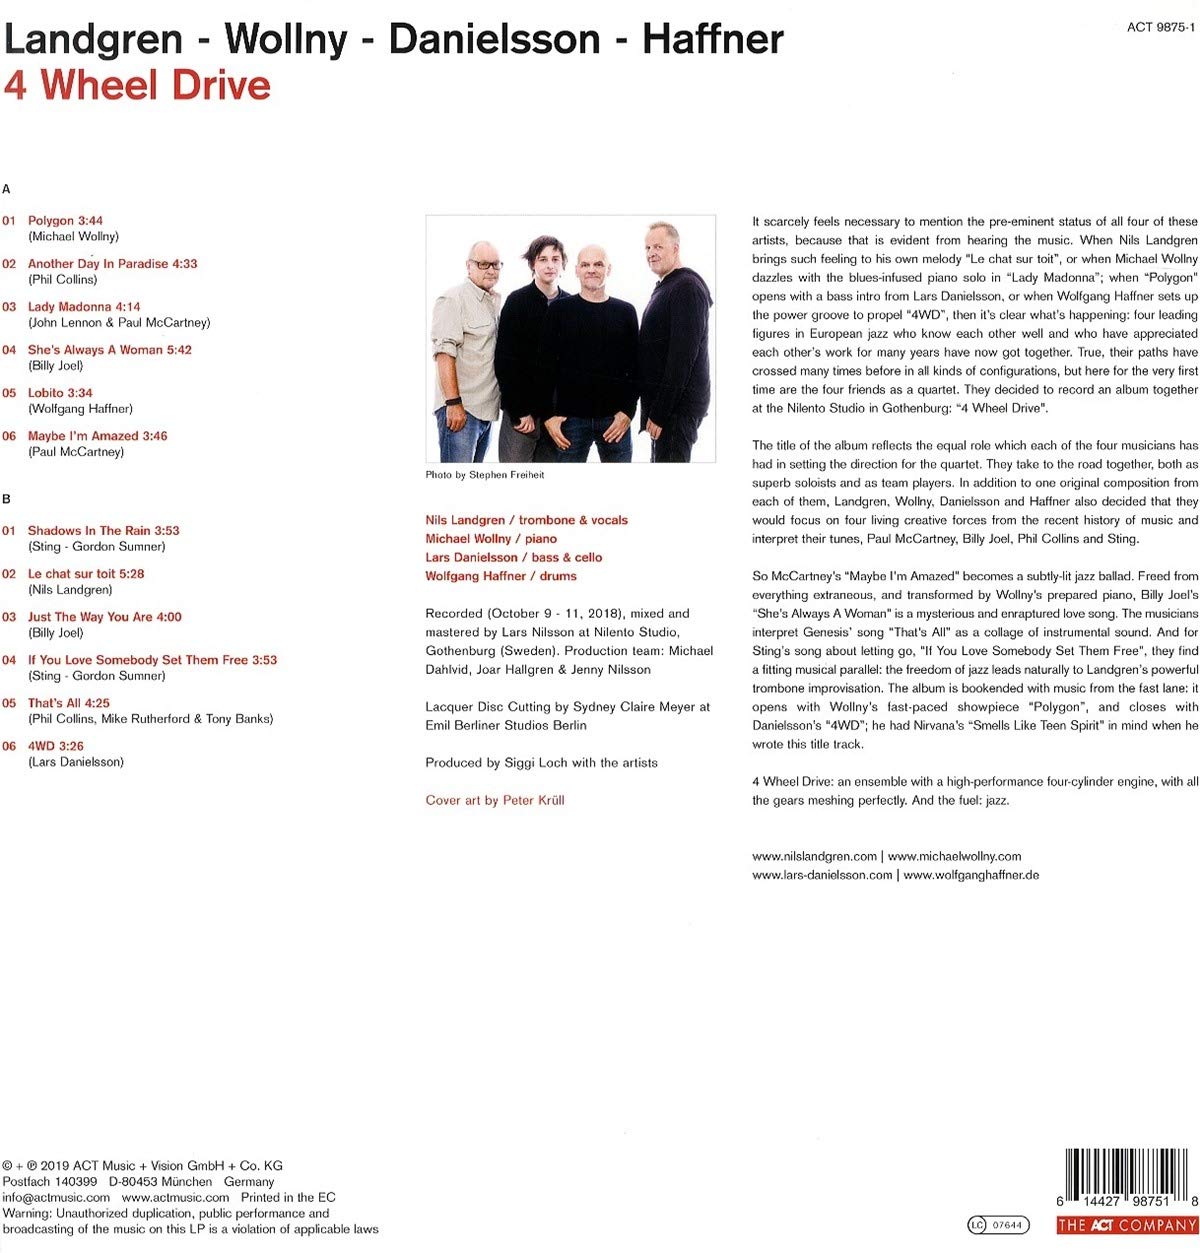 Nils Landgren / Michael Wollny / Lars Danielsson / Wolfgang Haffner- 4 Wheel Drive [LP]